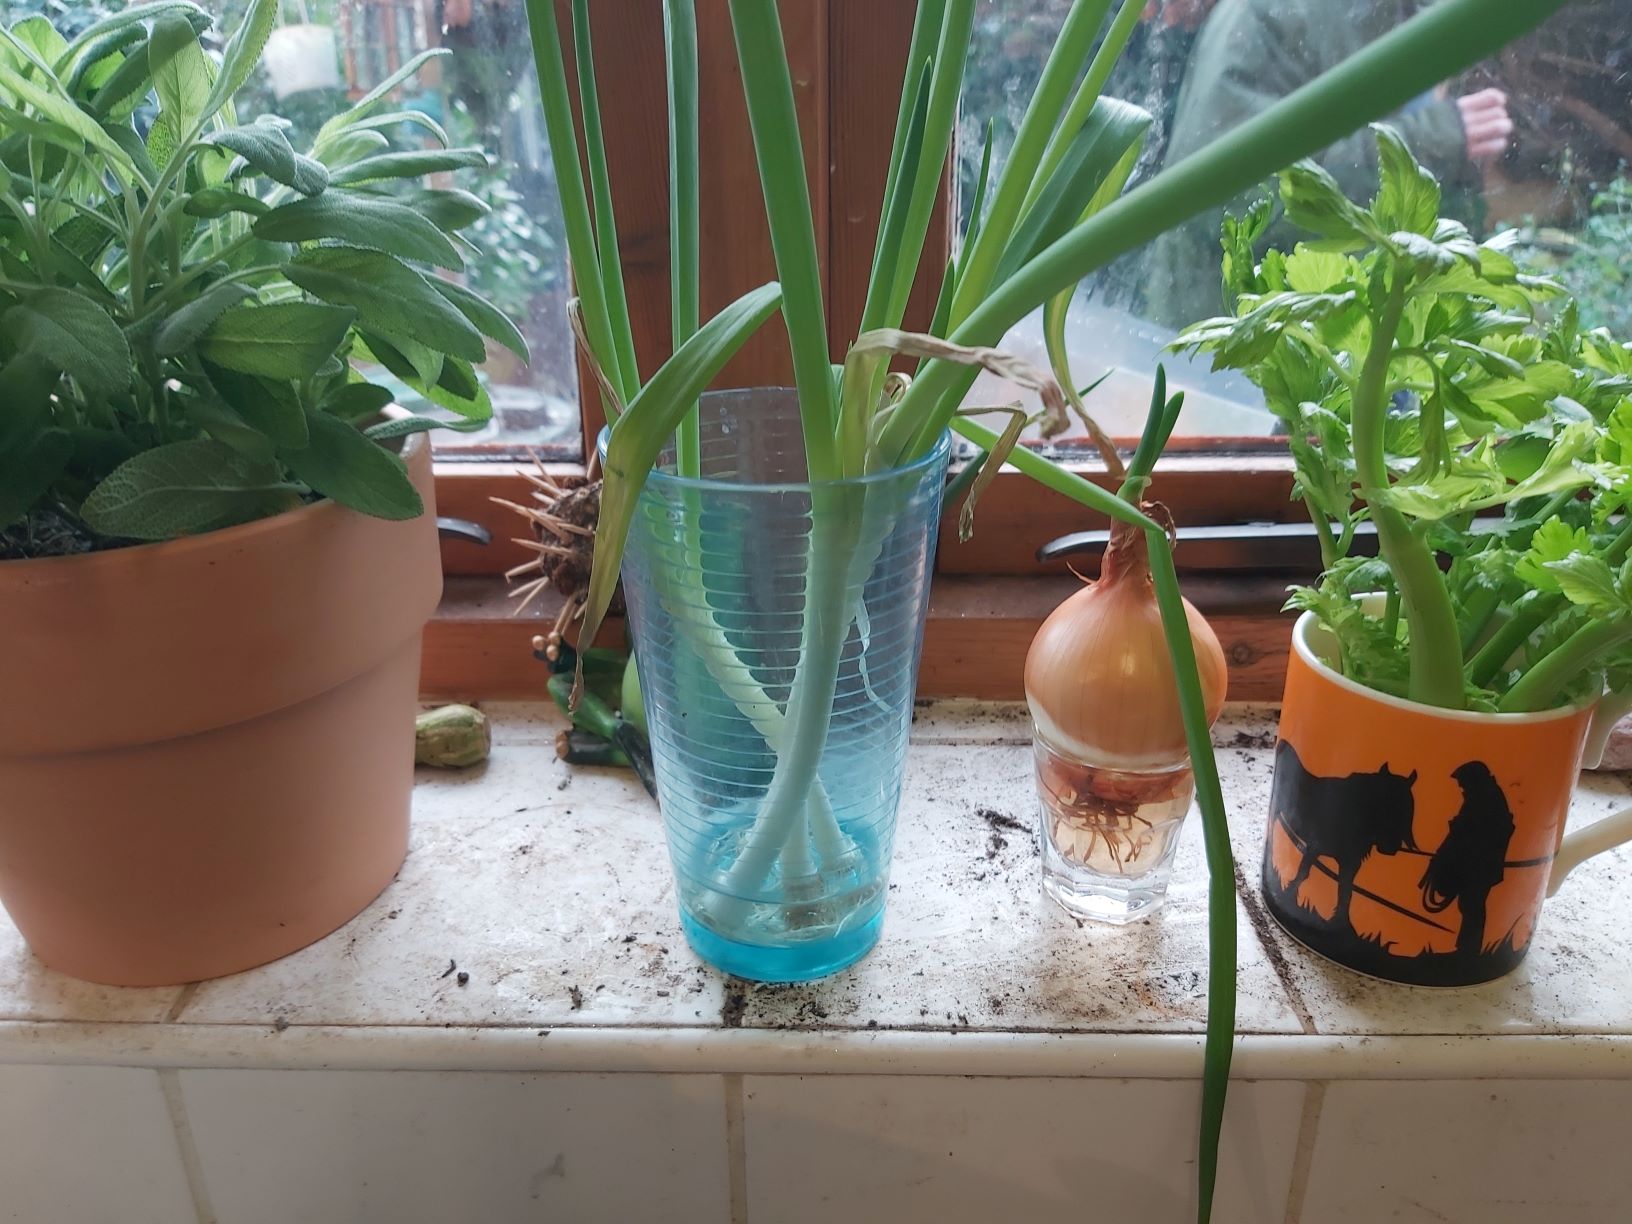 Growing veg indoors